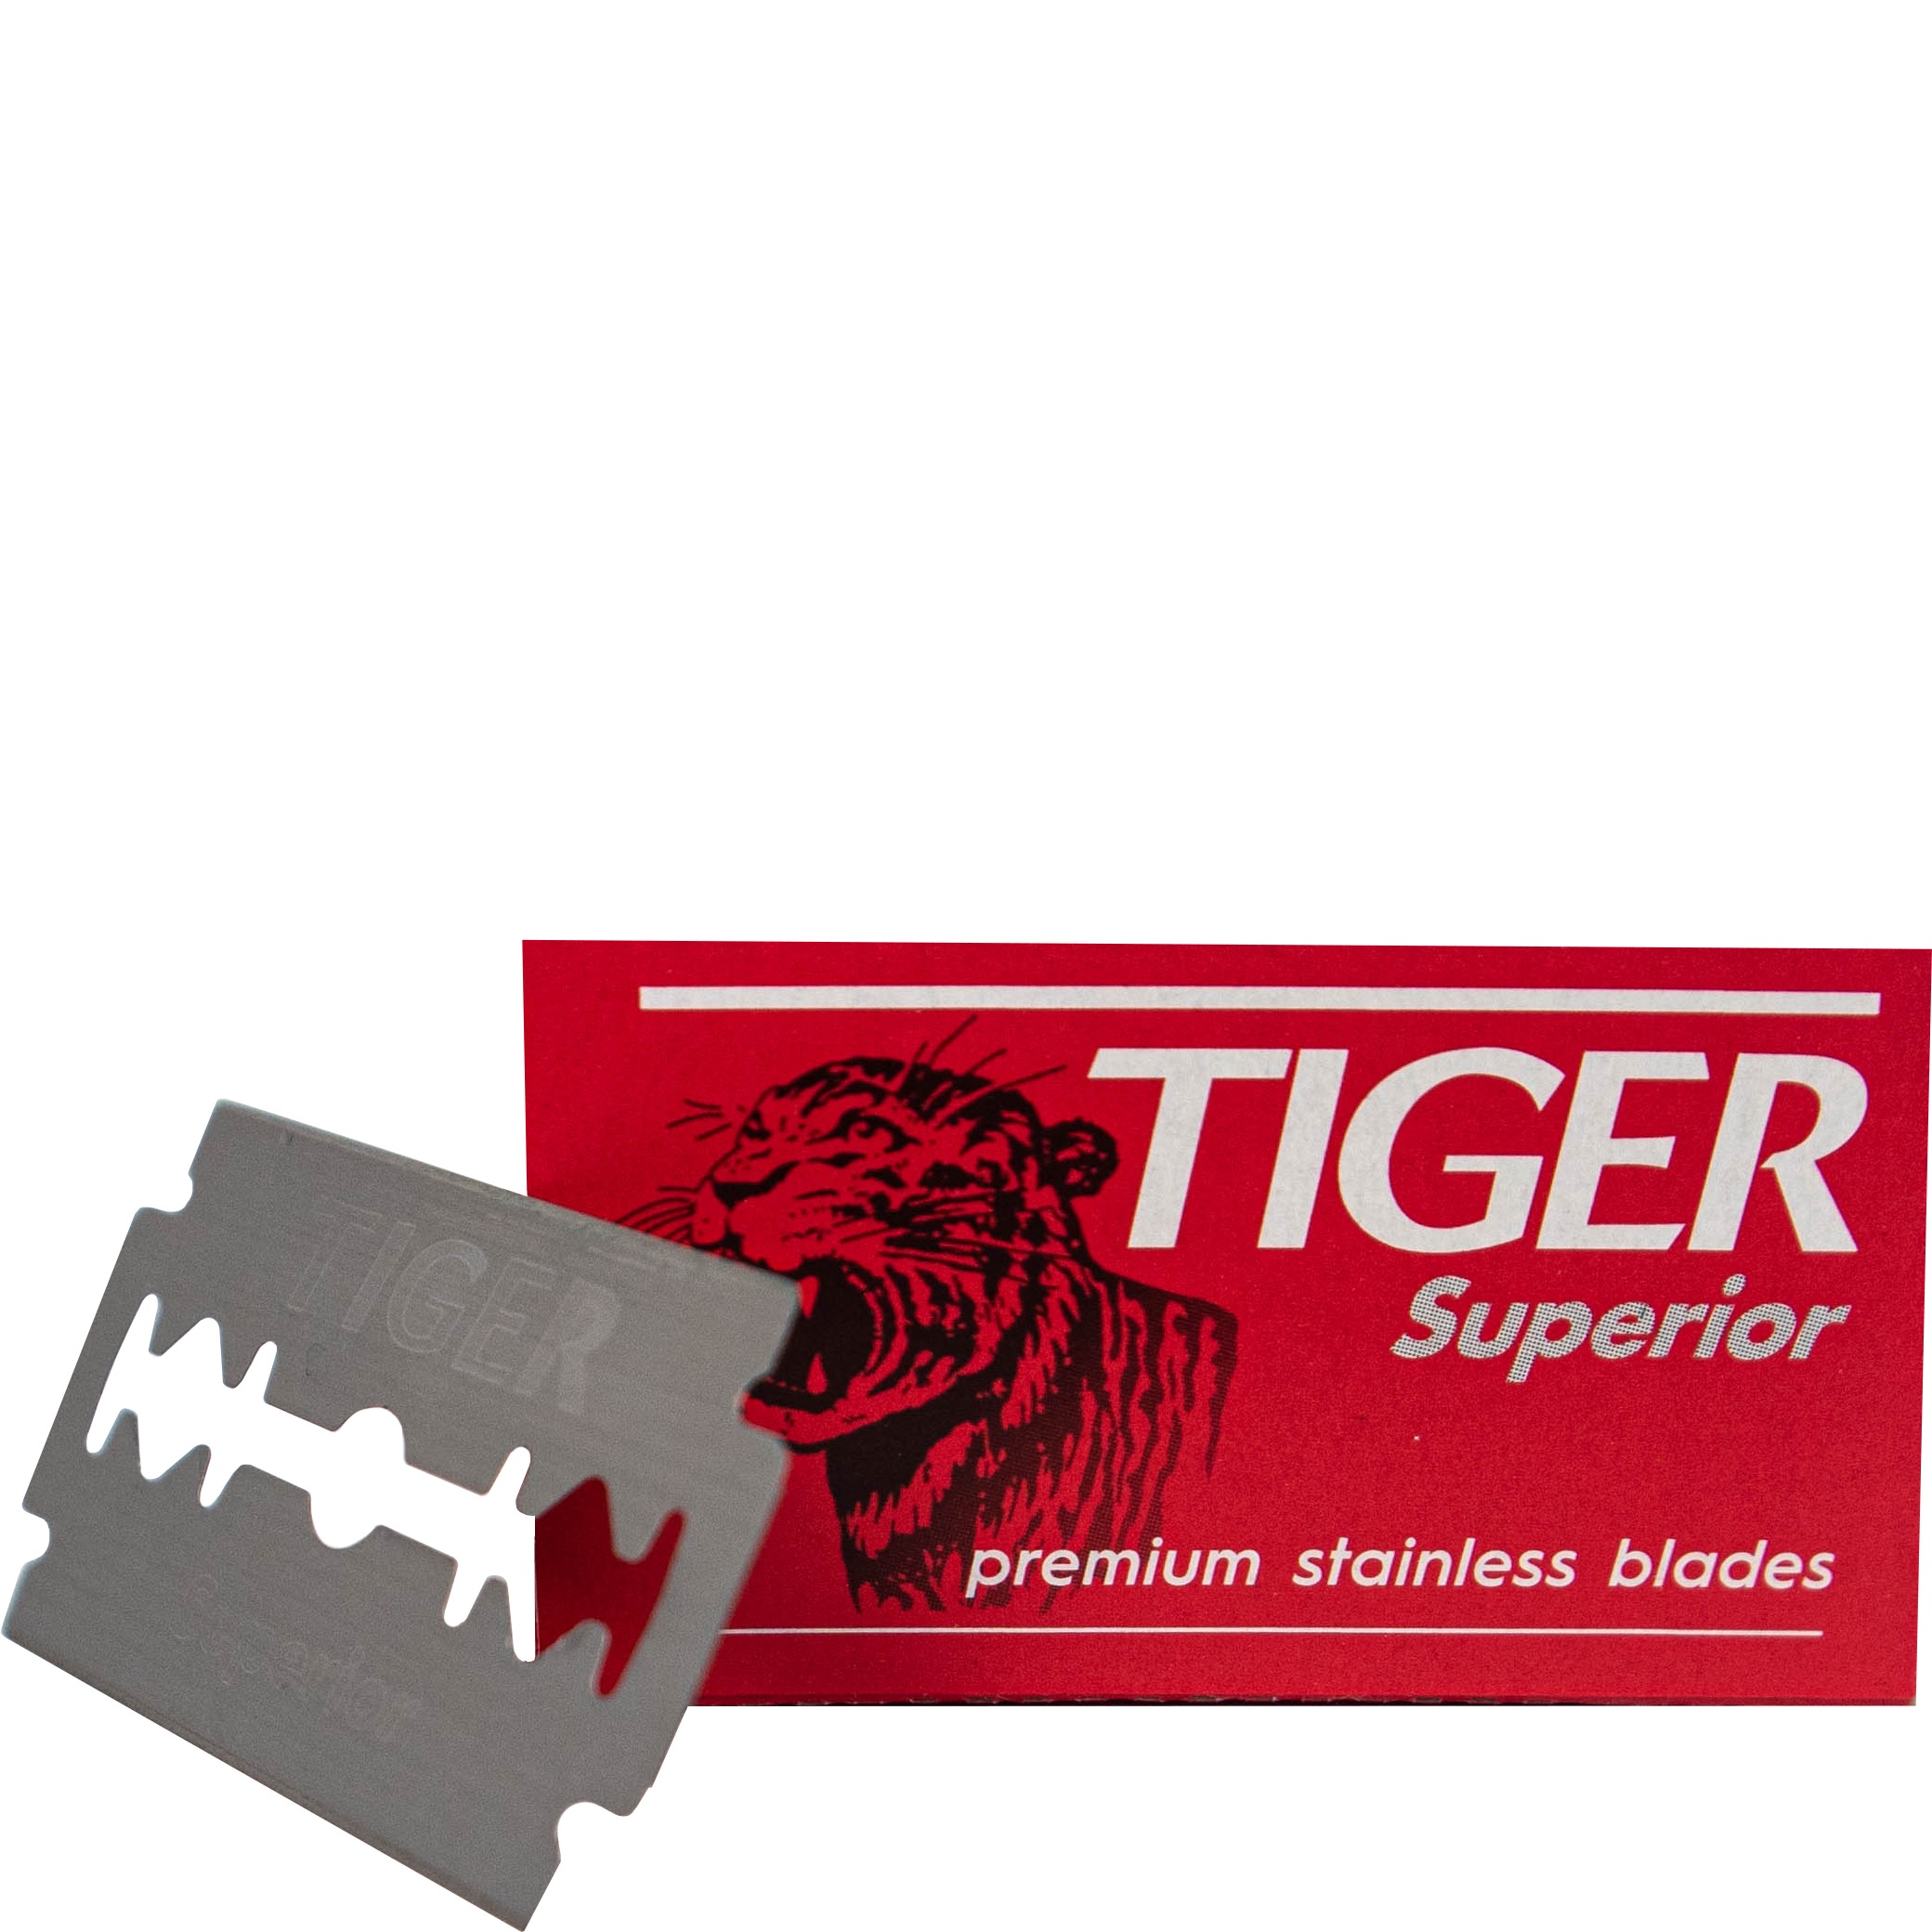 Tiger Superiour Double Edge Blades - 1.2 - DEB-TIGER-SUP